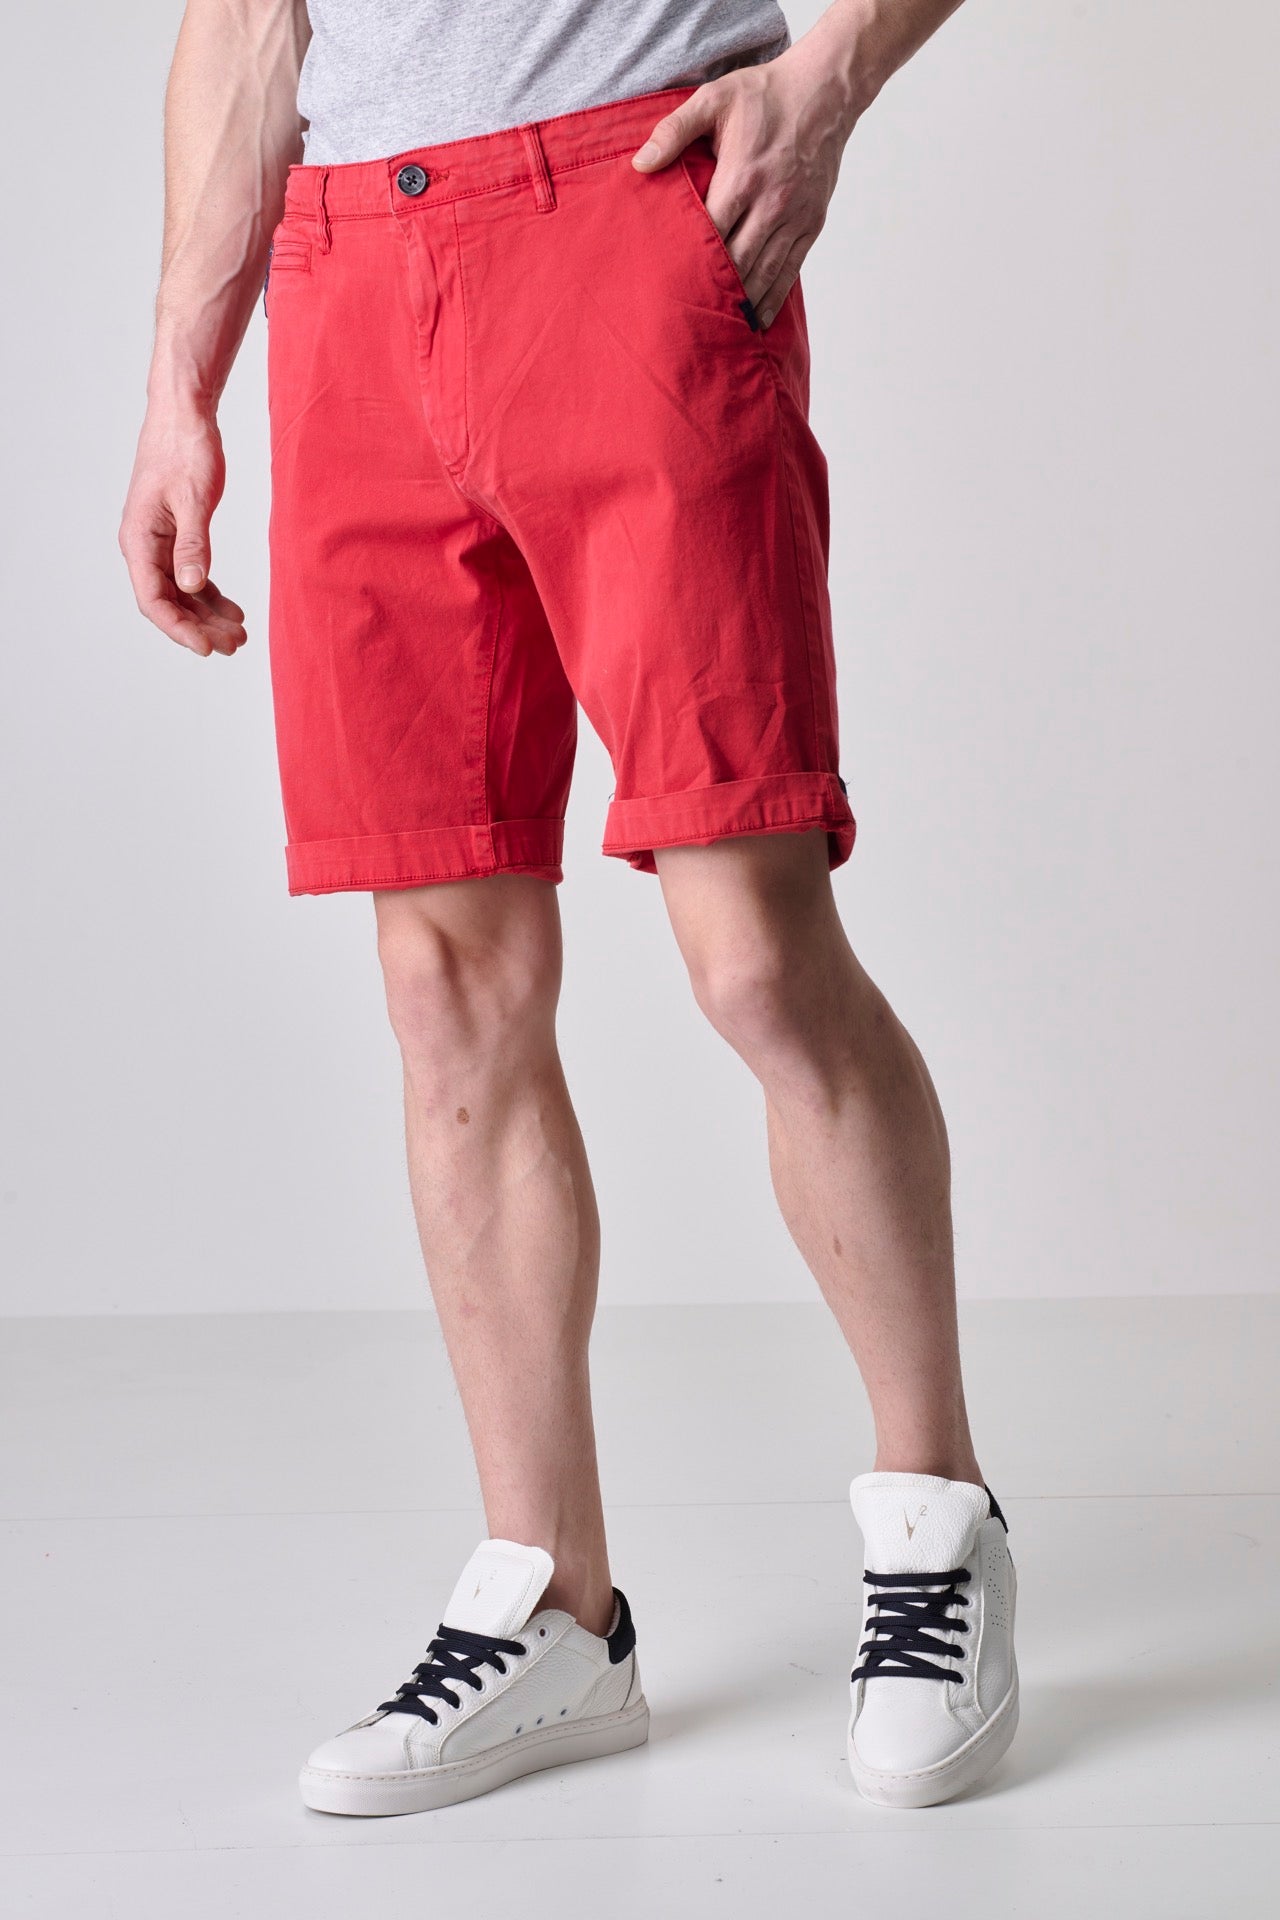 Red Chinos Shorts